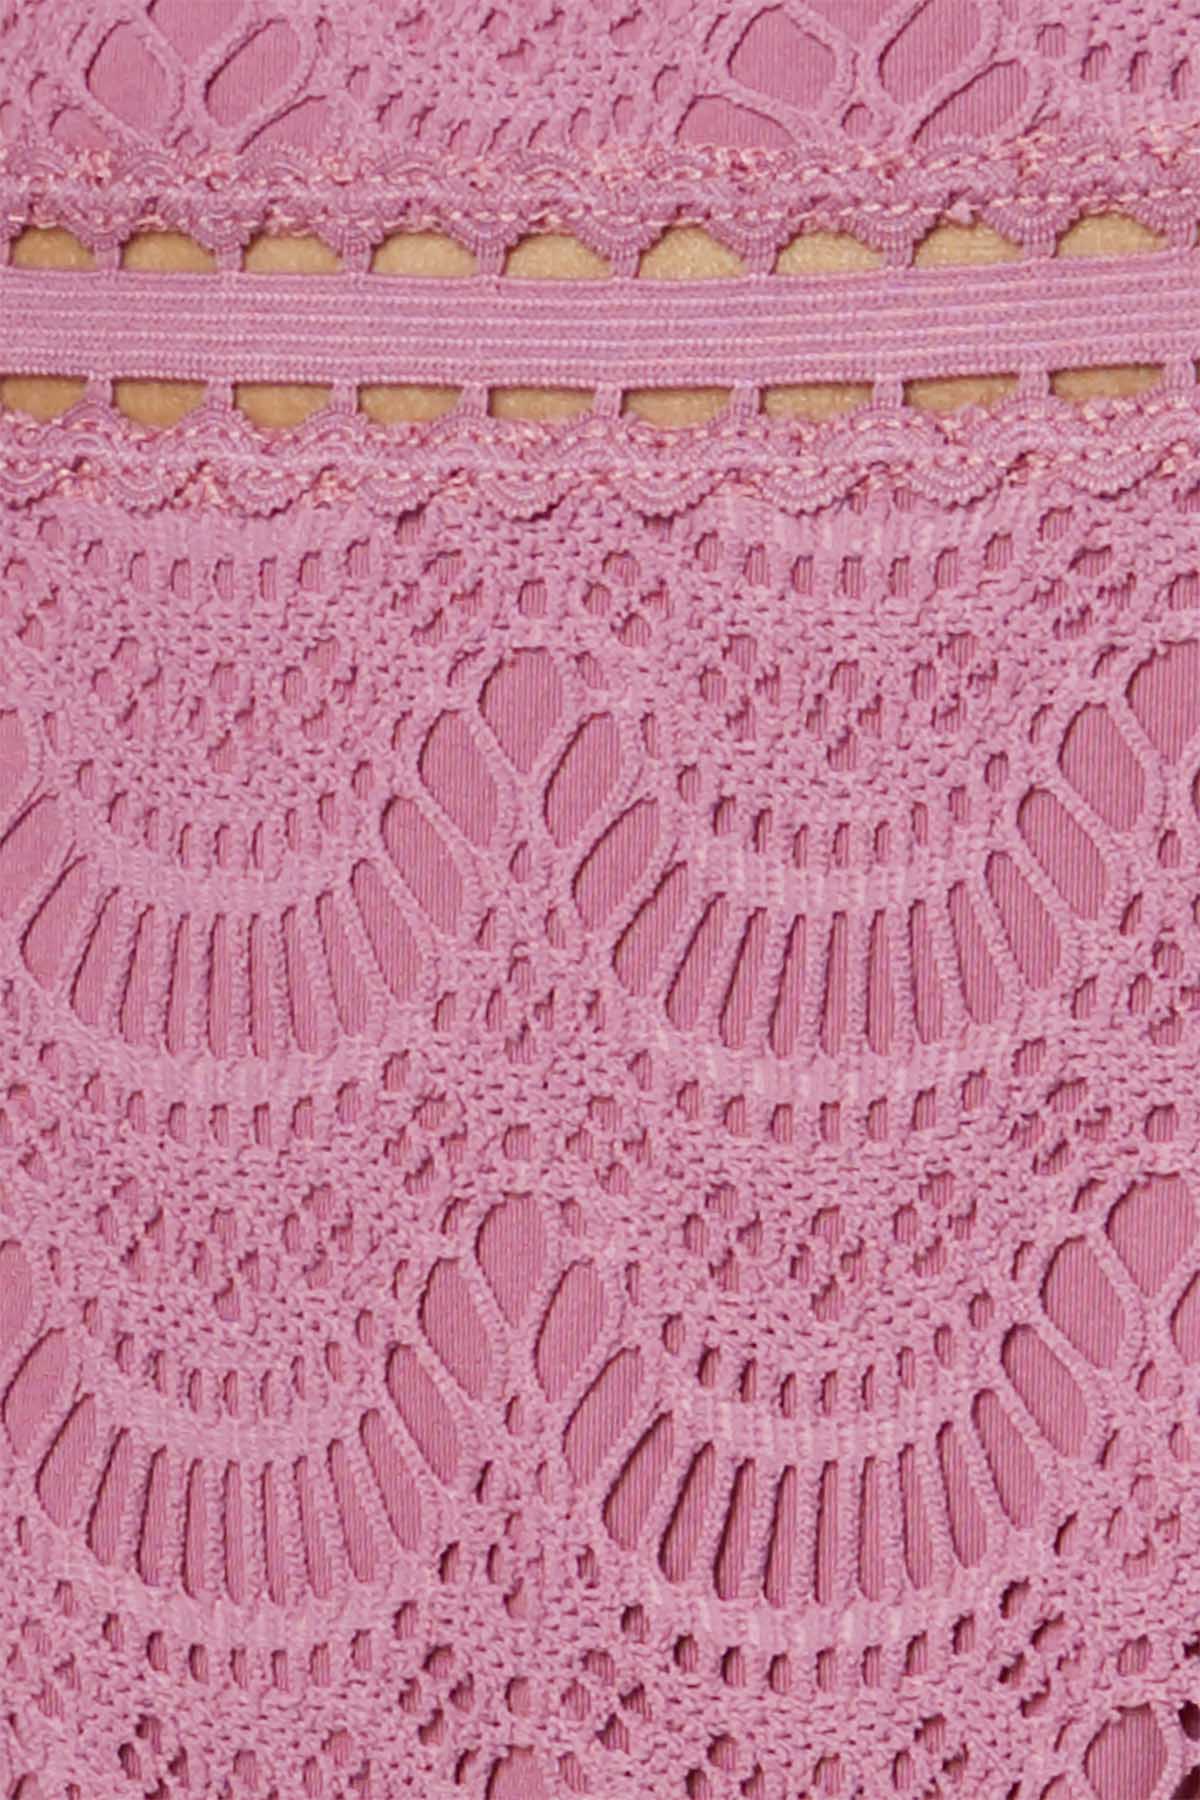 BECCA by Rebecca Virtue Mauve Color Play Crochet High-Waist Bikini Bottom